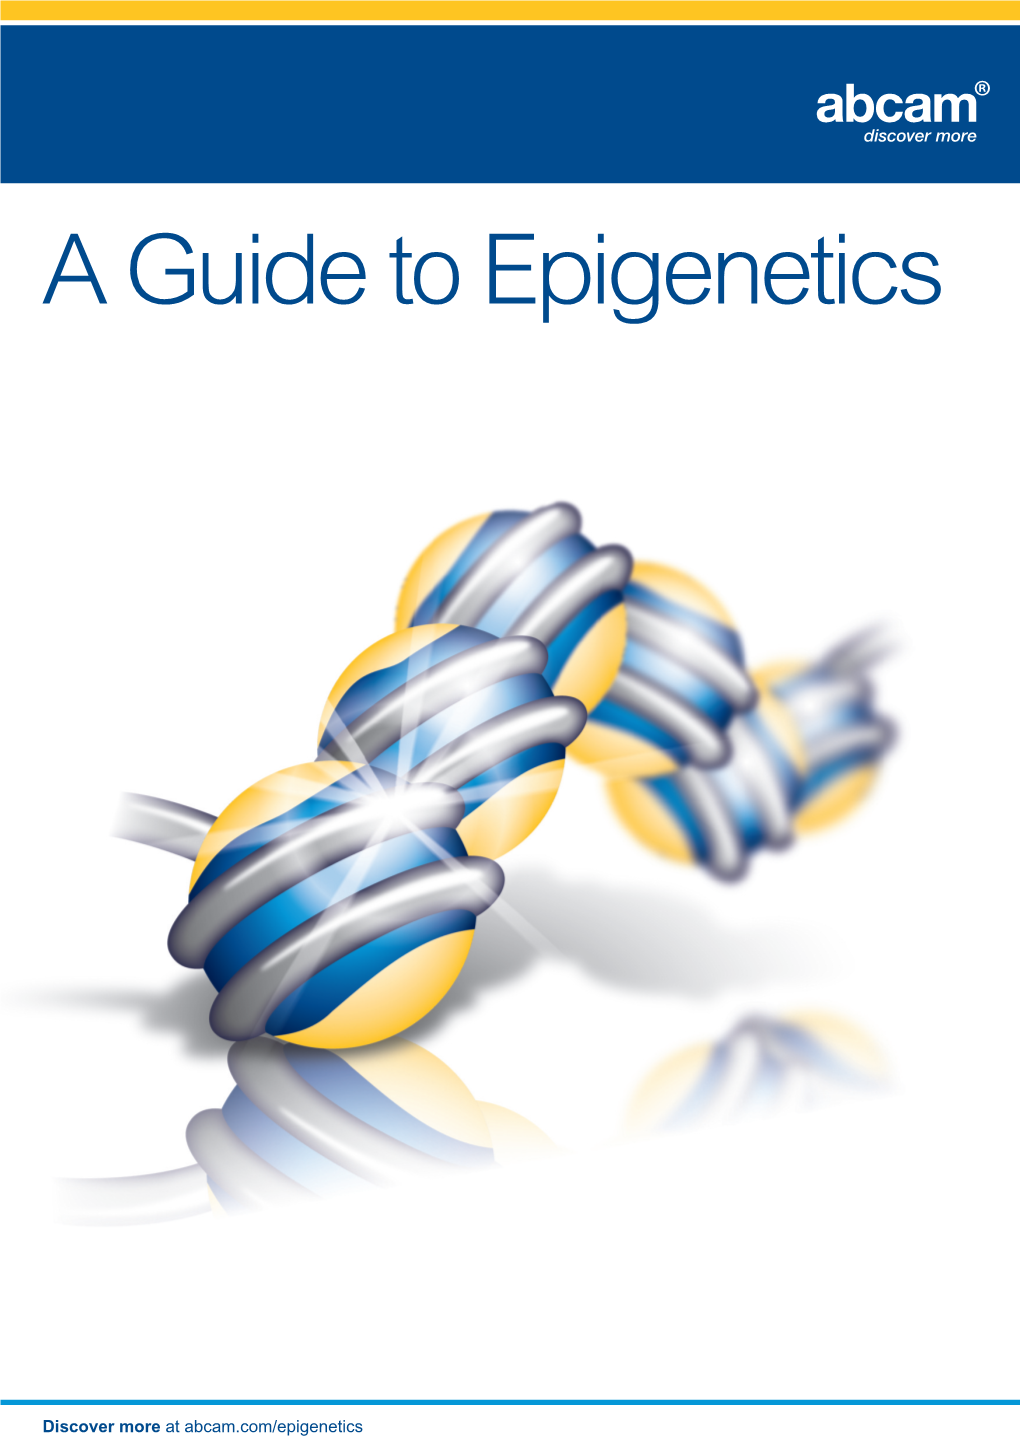 A Guide to Epigenetics